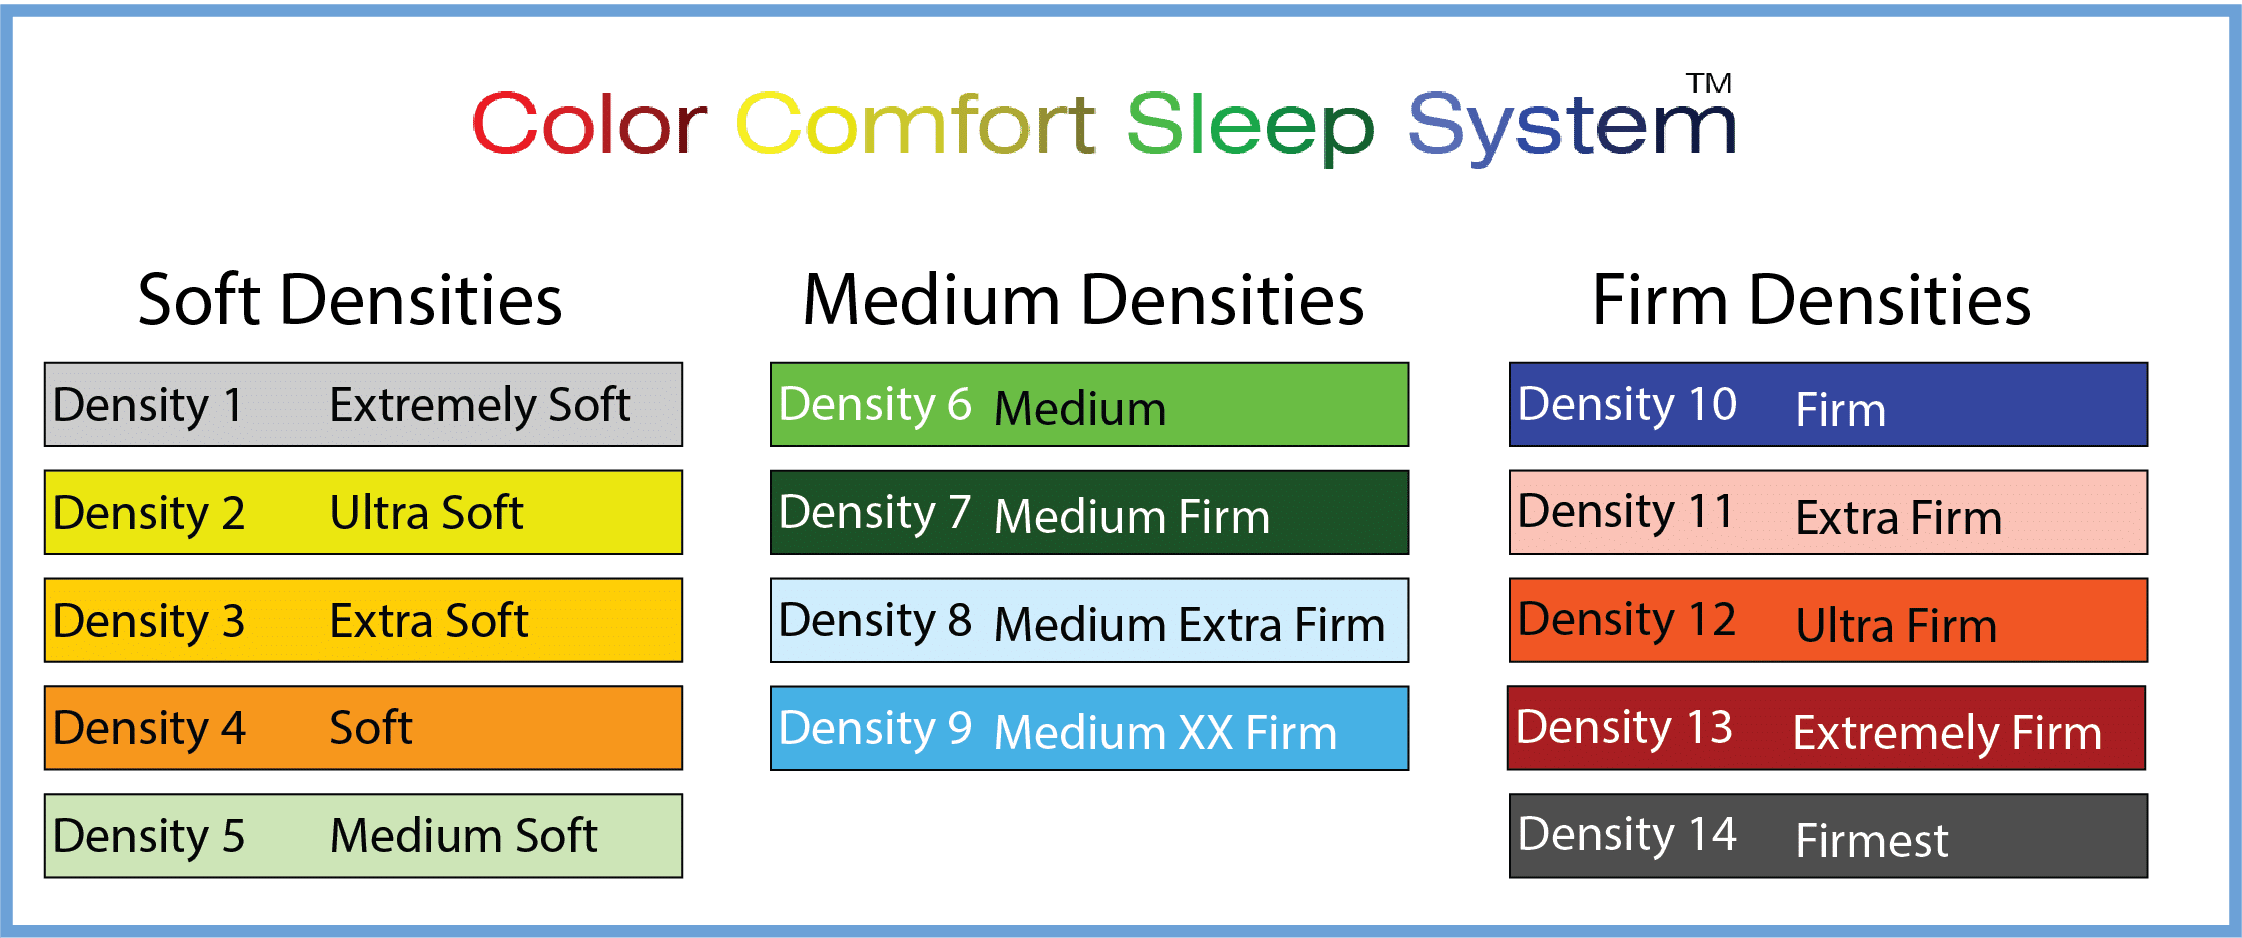 color comfort sleep system